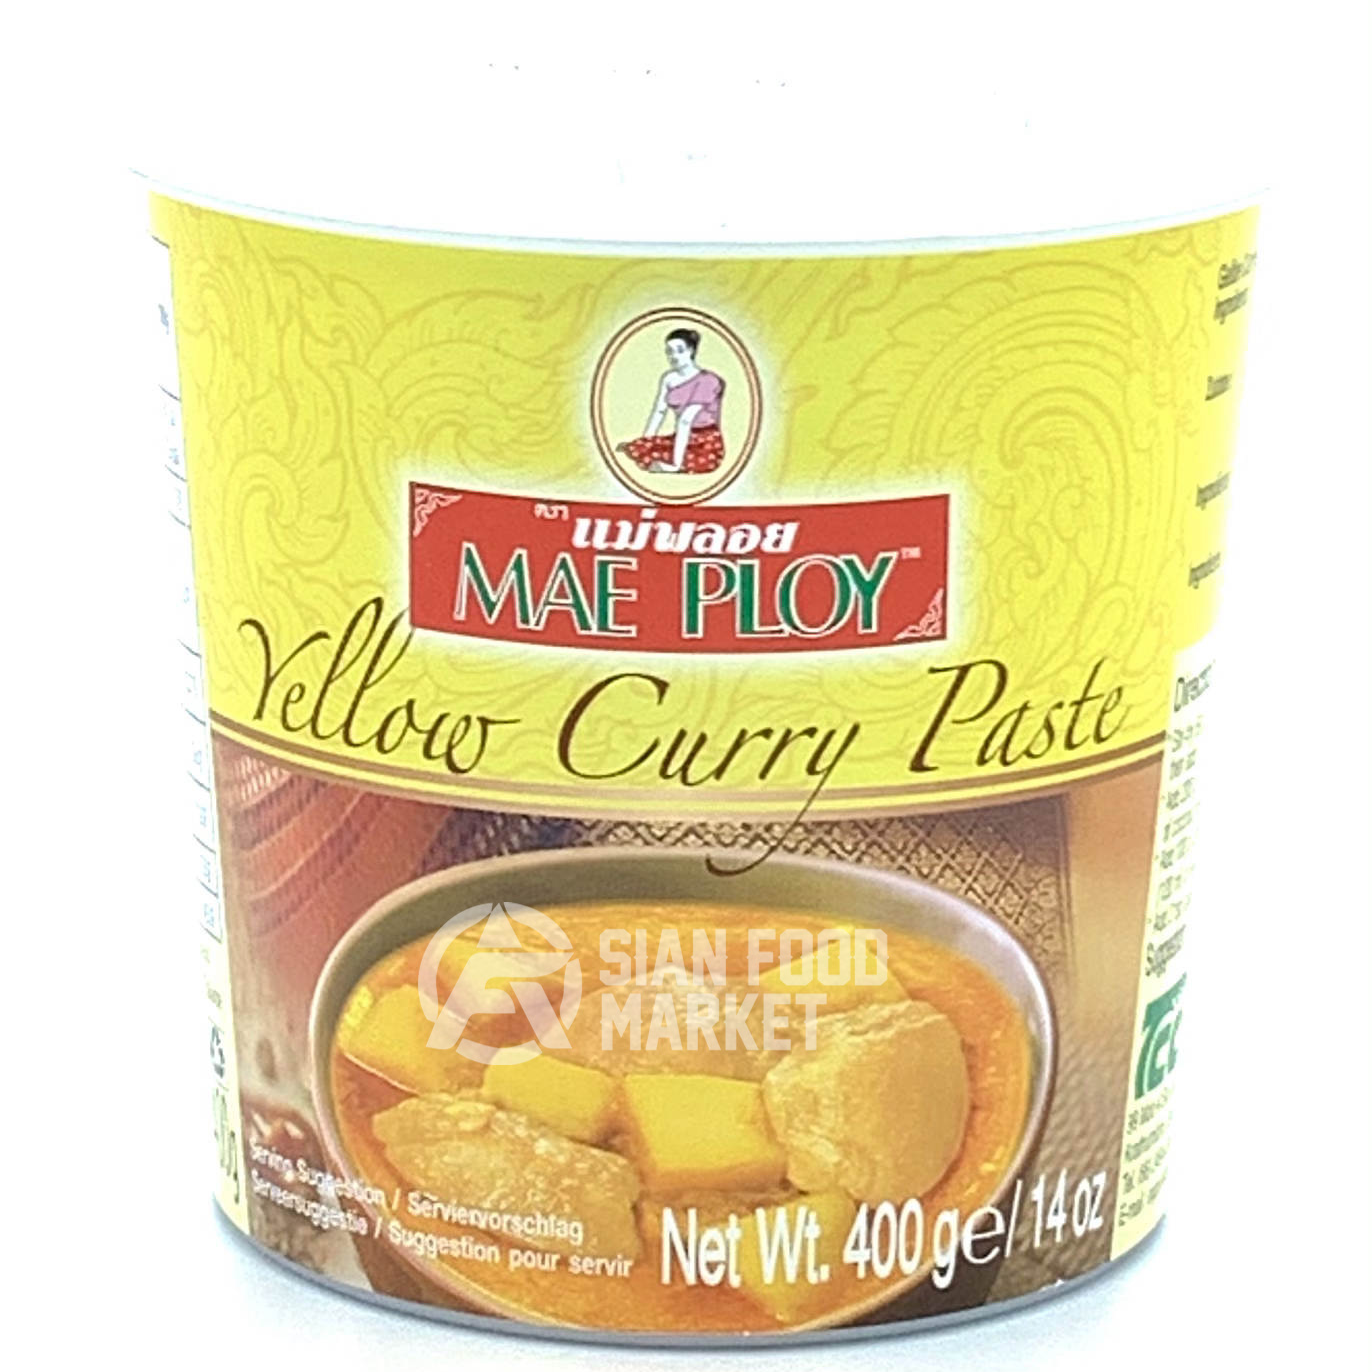 Mae Ploy gul curry pasta, 400g